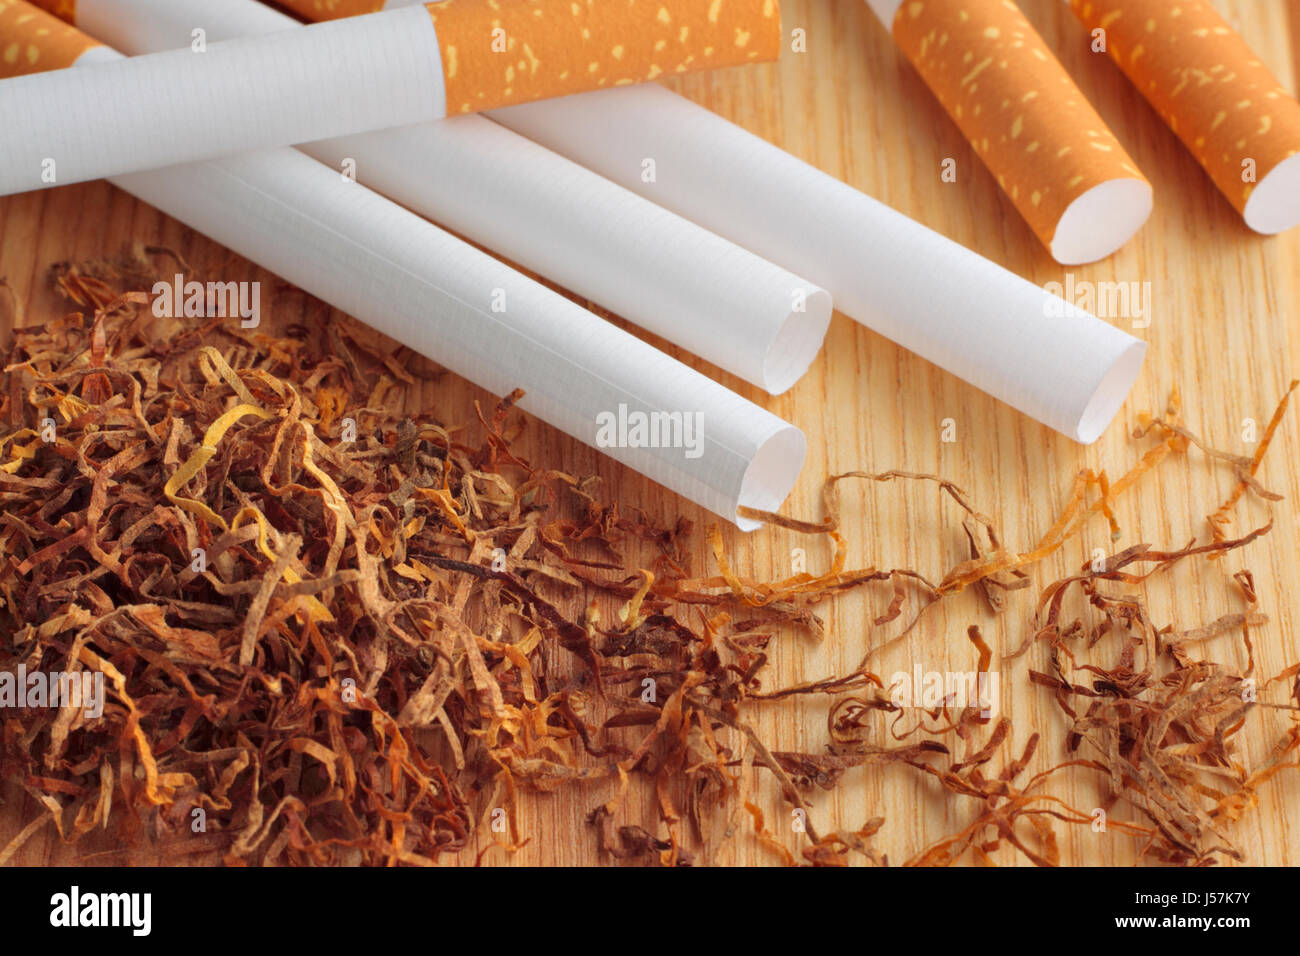 Tubos de cigarrillos fotografías e imágenes de alta resolución - Alamy